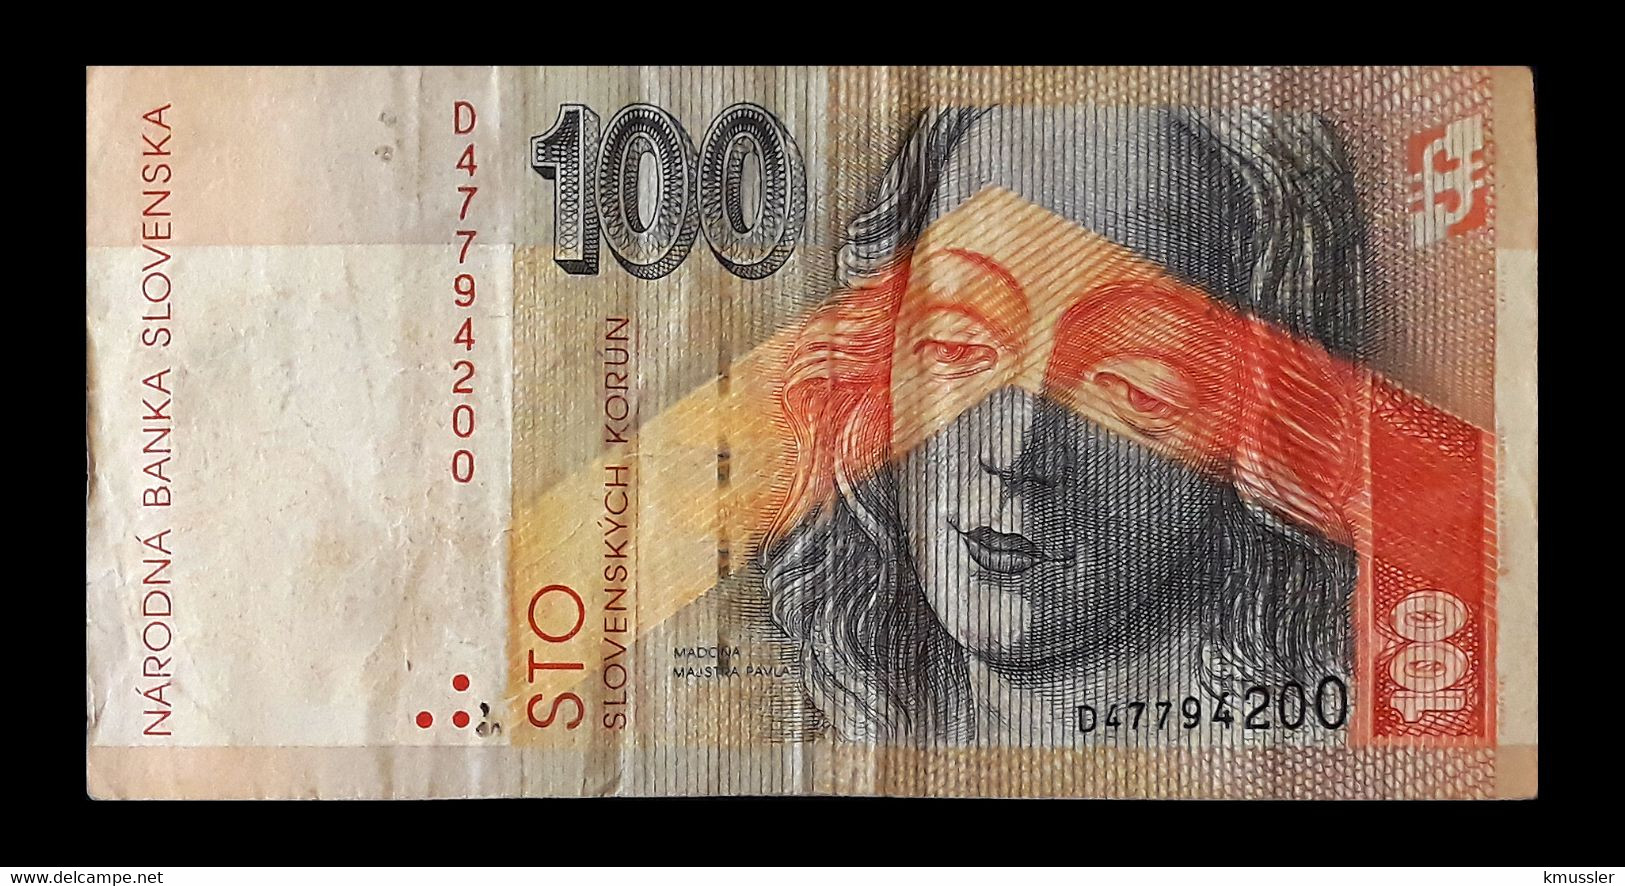 # # # Banknote Aus Slowakei (Slowakia) 100 Korún 1993 # # # - Slovakia